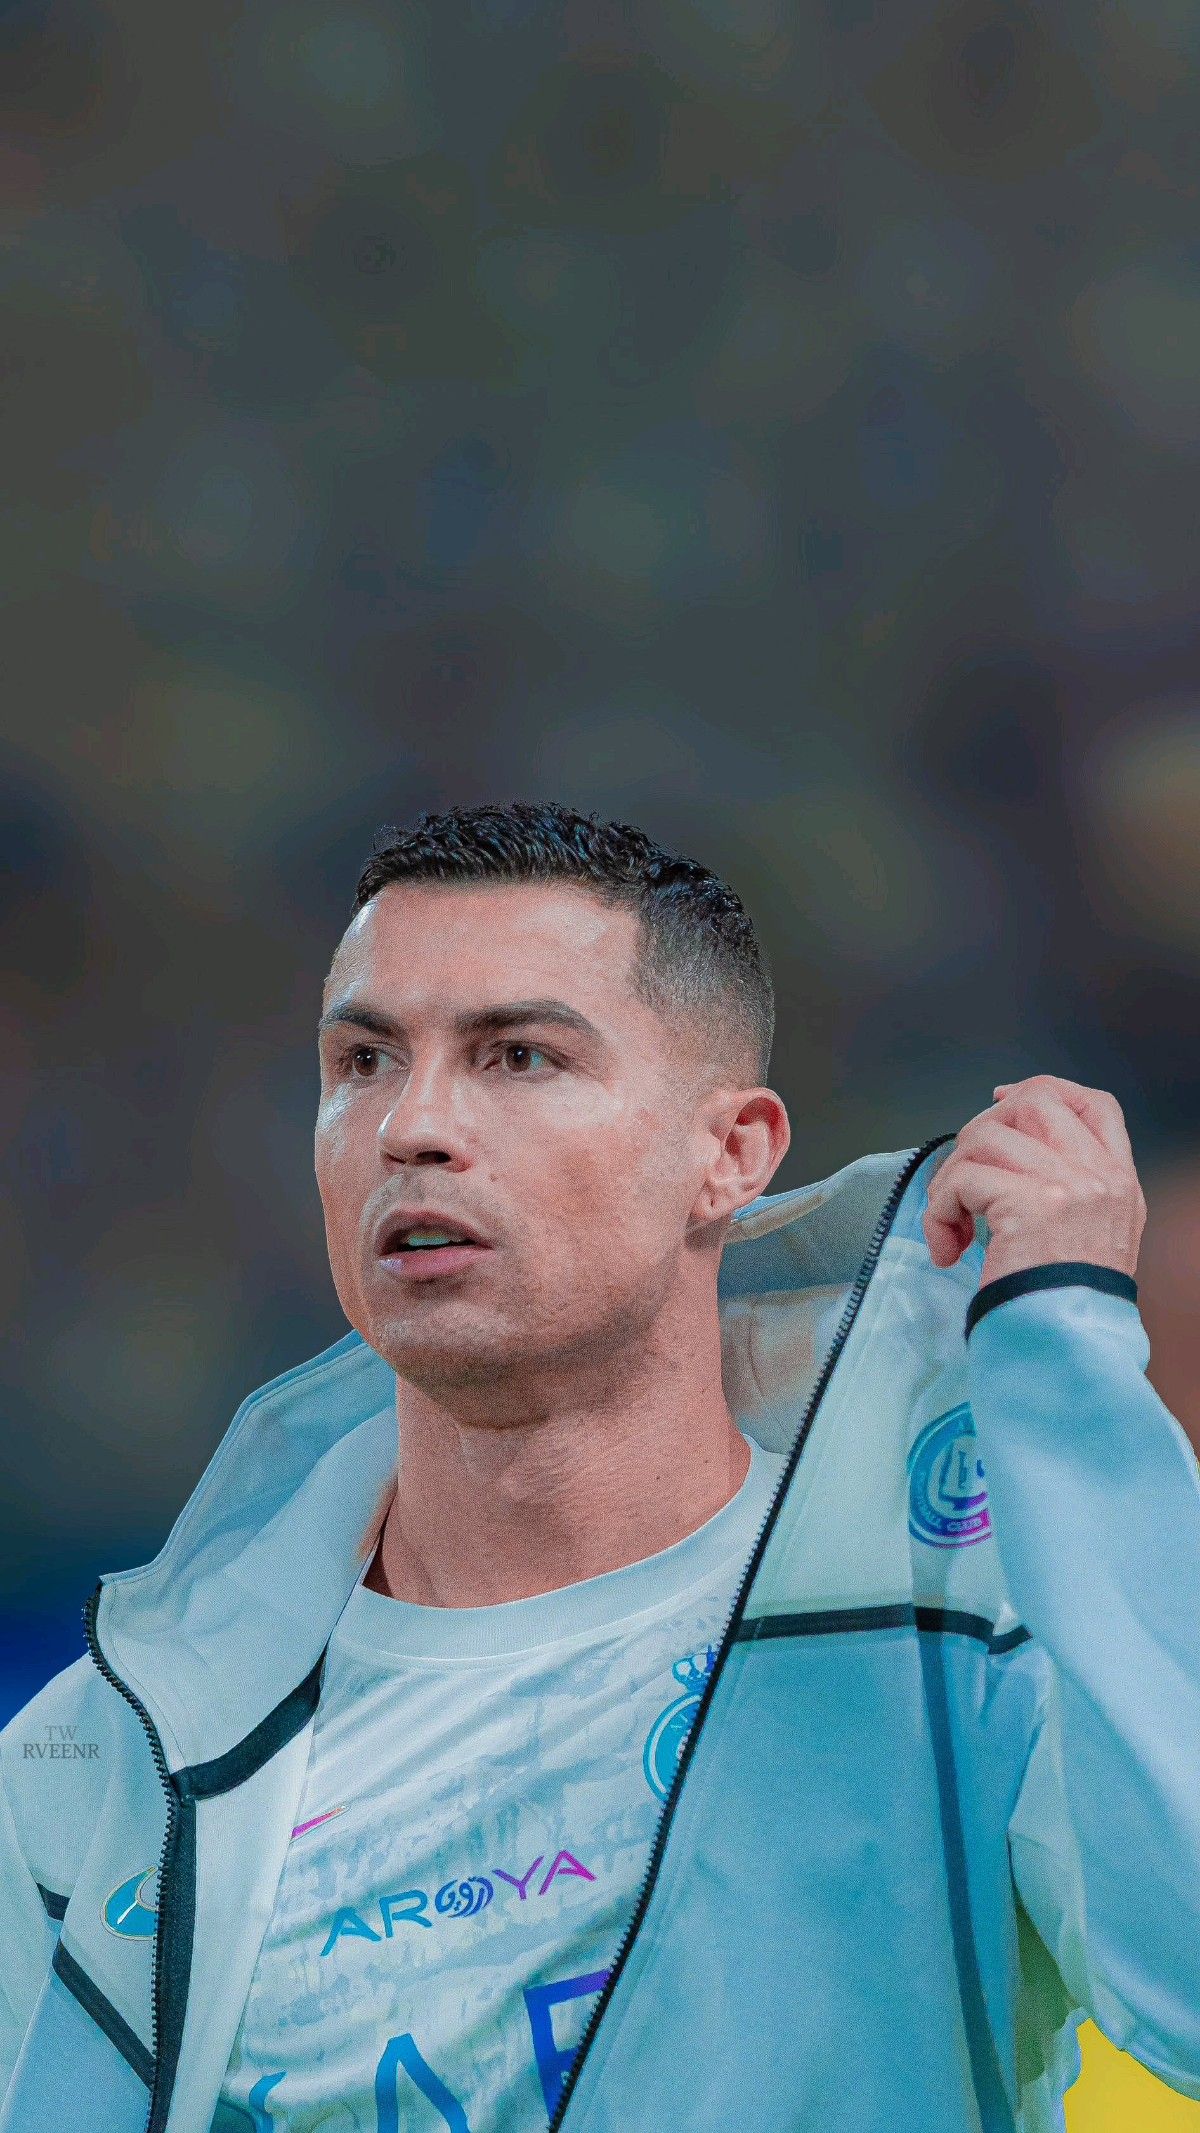 Cristiano, cristiano ronaldo al nassr, Ronaldo, Wallpaper, wallpapers iPhone - Cristiano Ronaldo Dominates Al Nassr in 4K Splendor Wallpapers